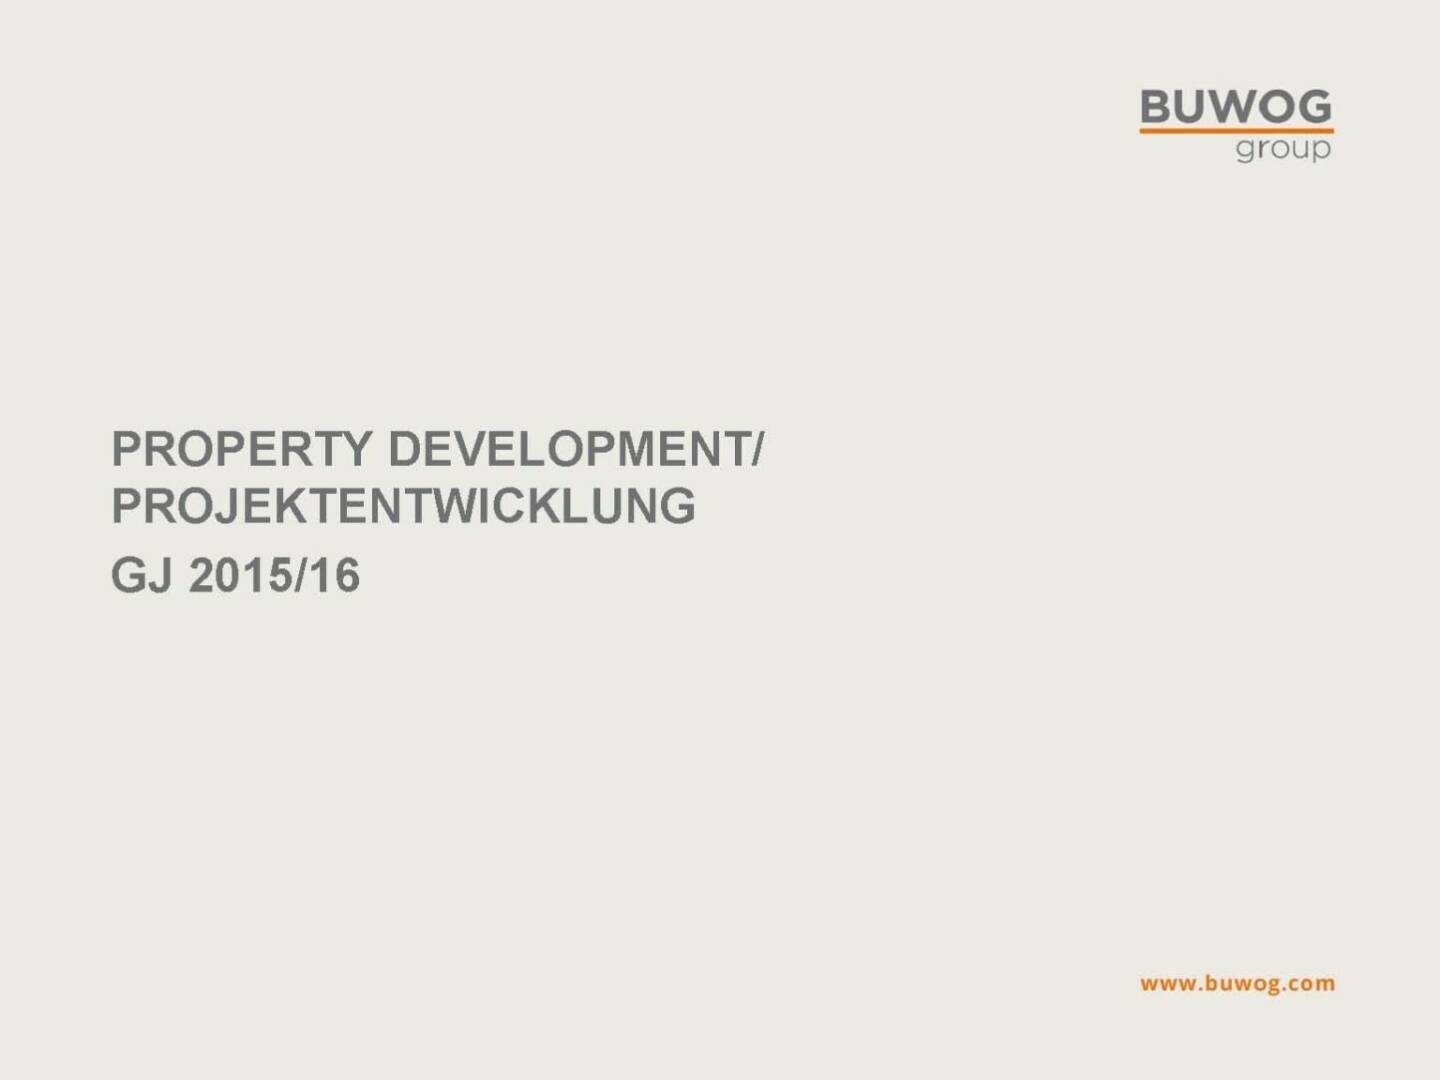 Buwog Group - Property Development